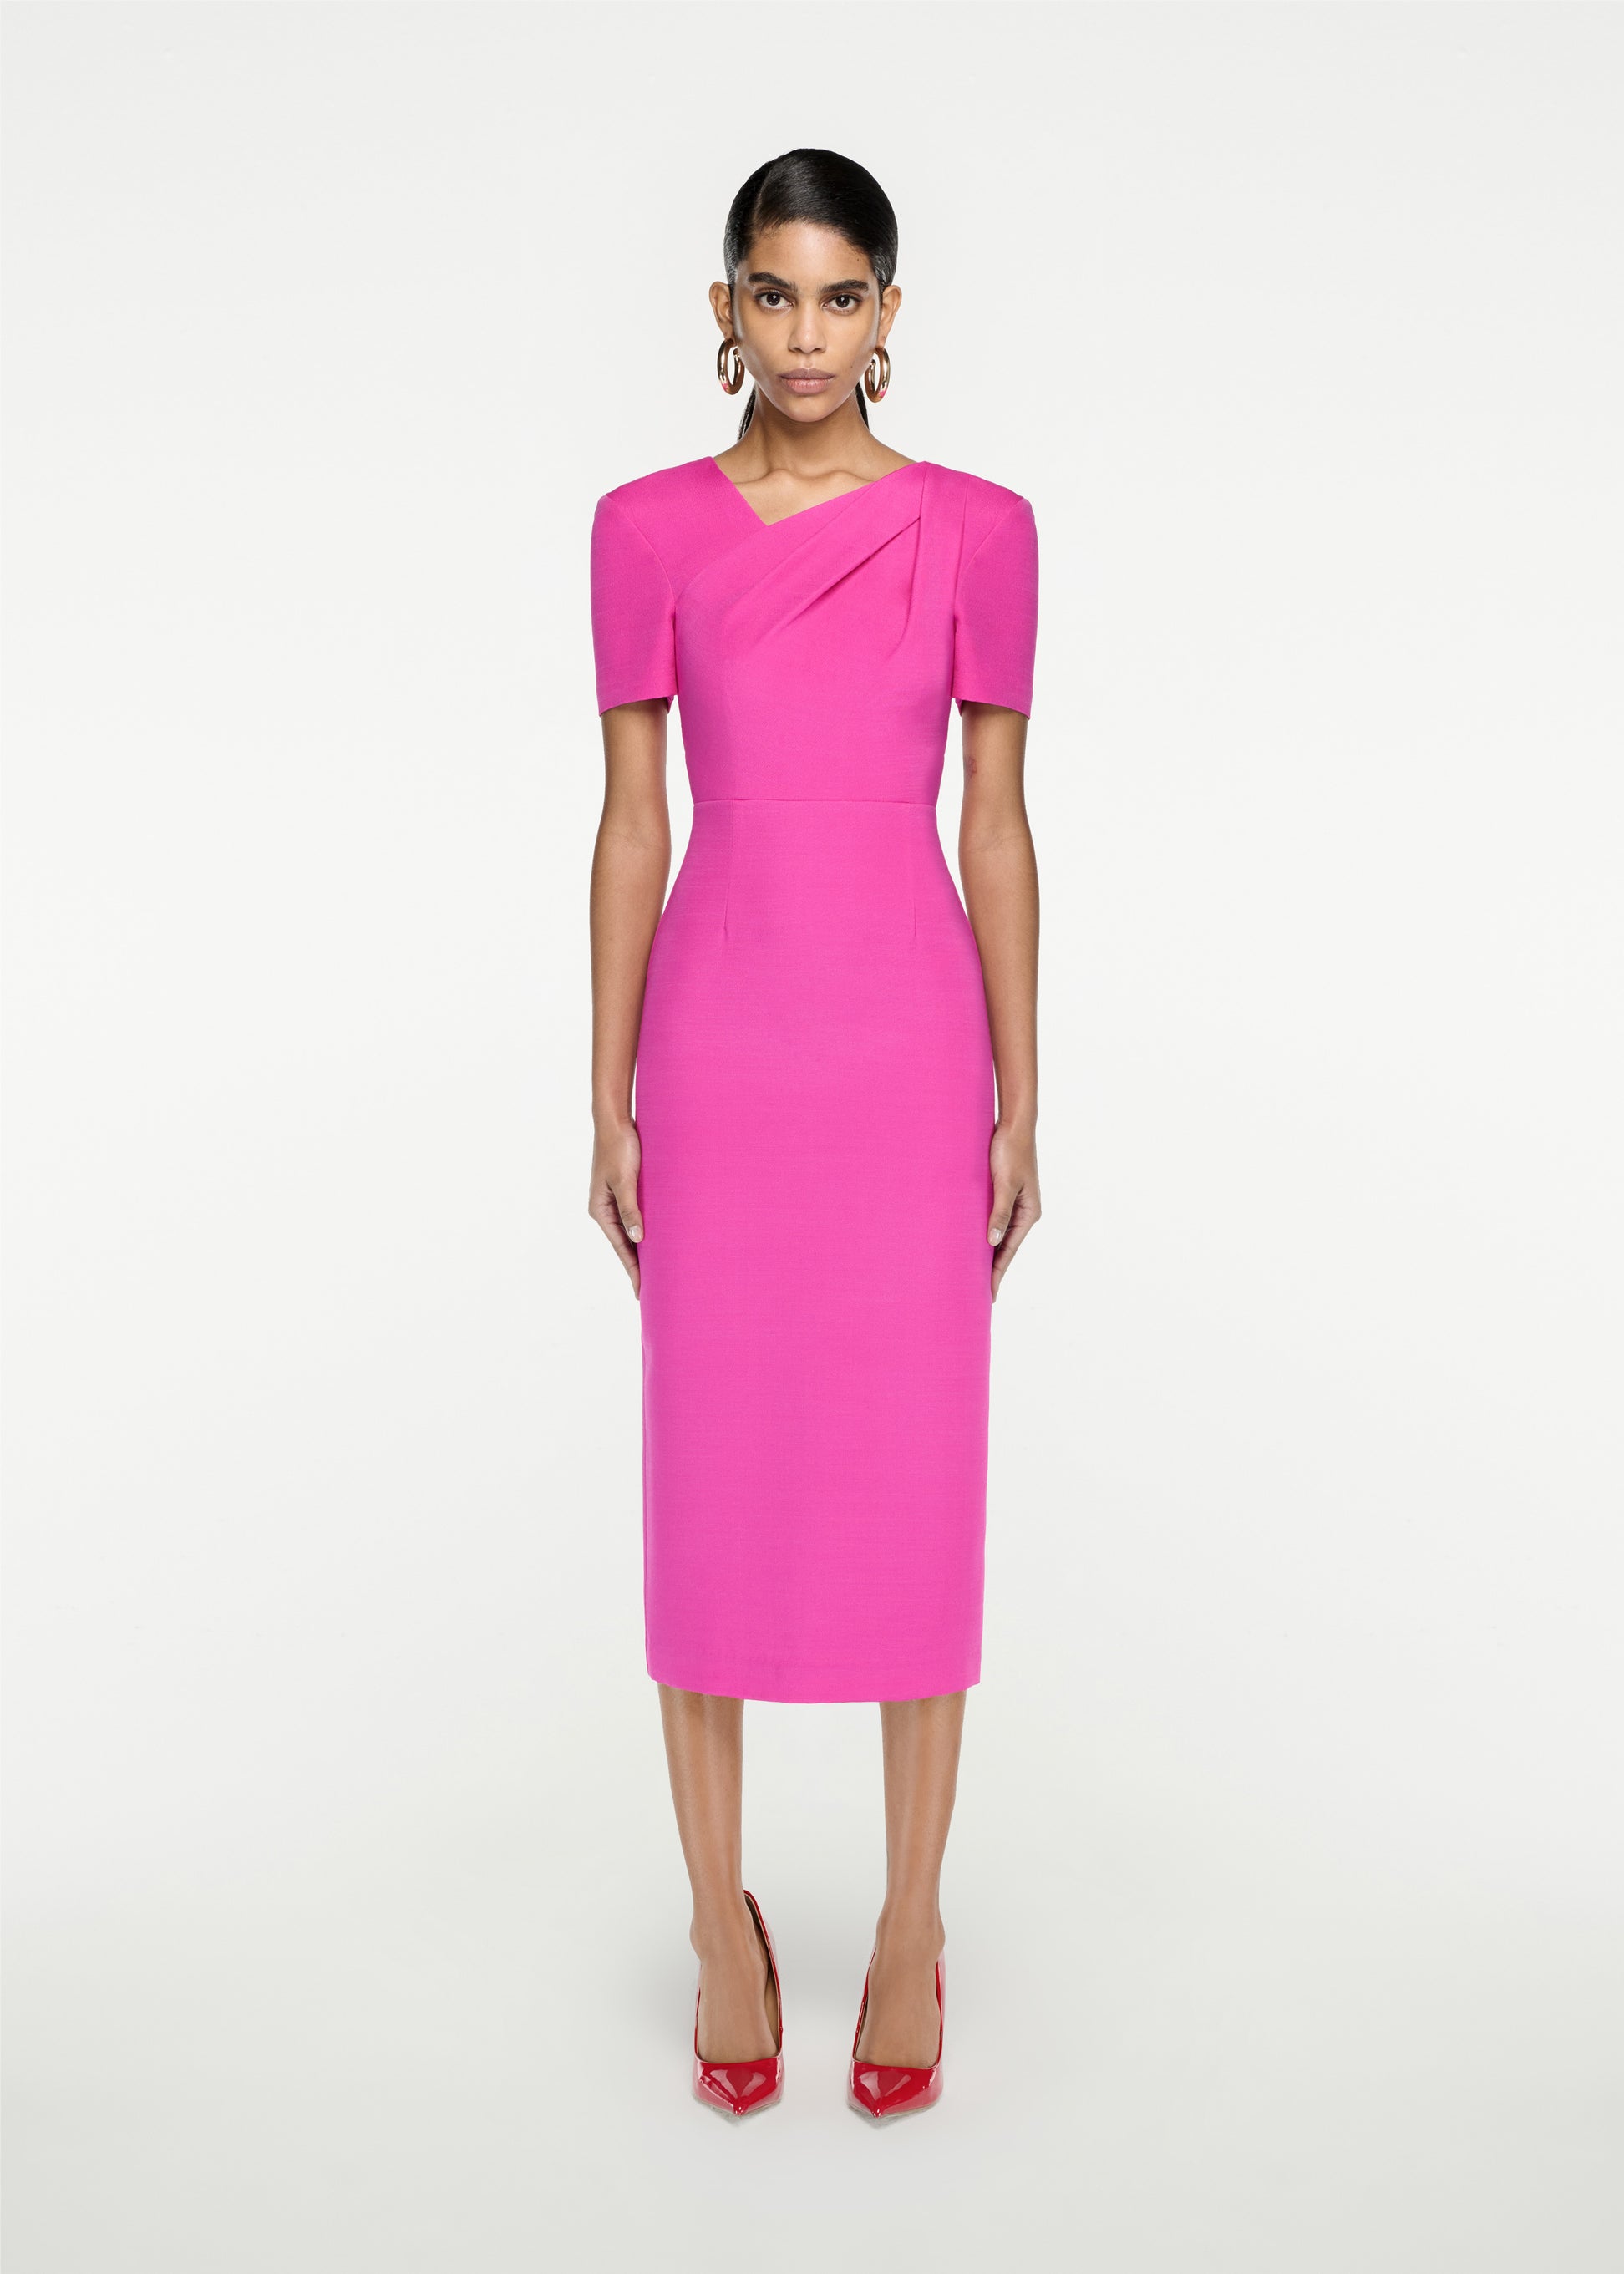 Woman wearing the Short Sleeve Silk Wool Midi Dress in Pink